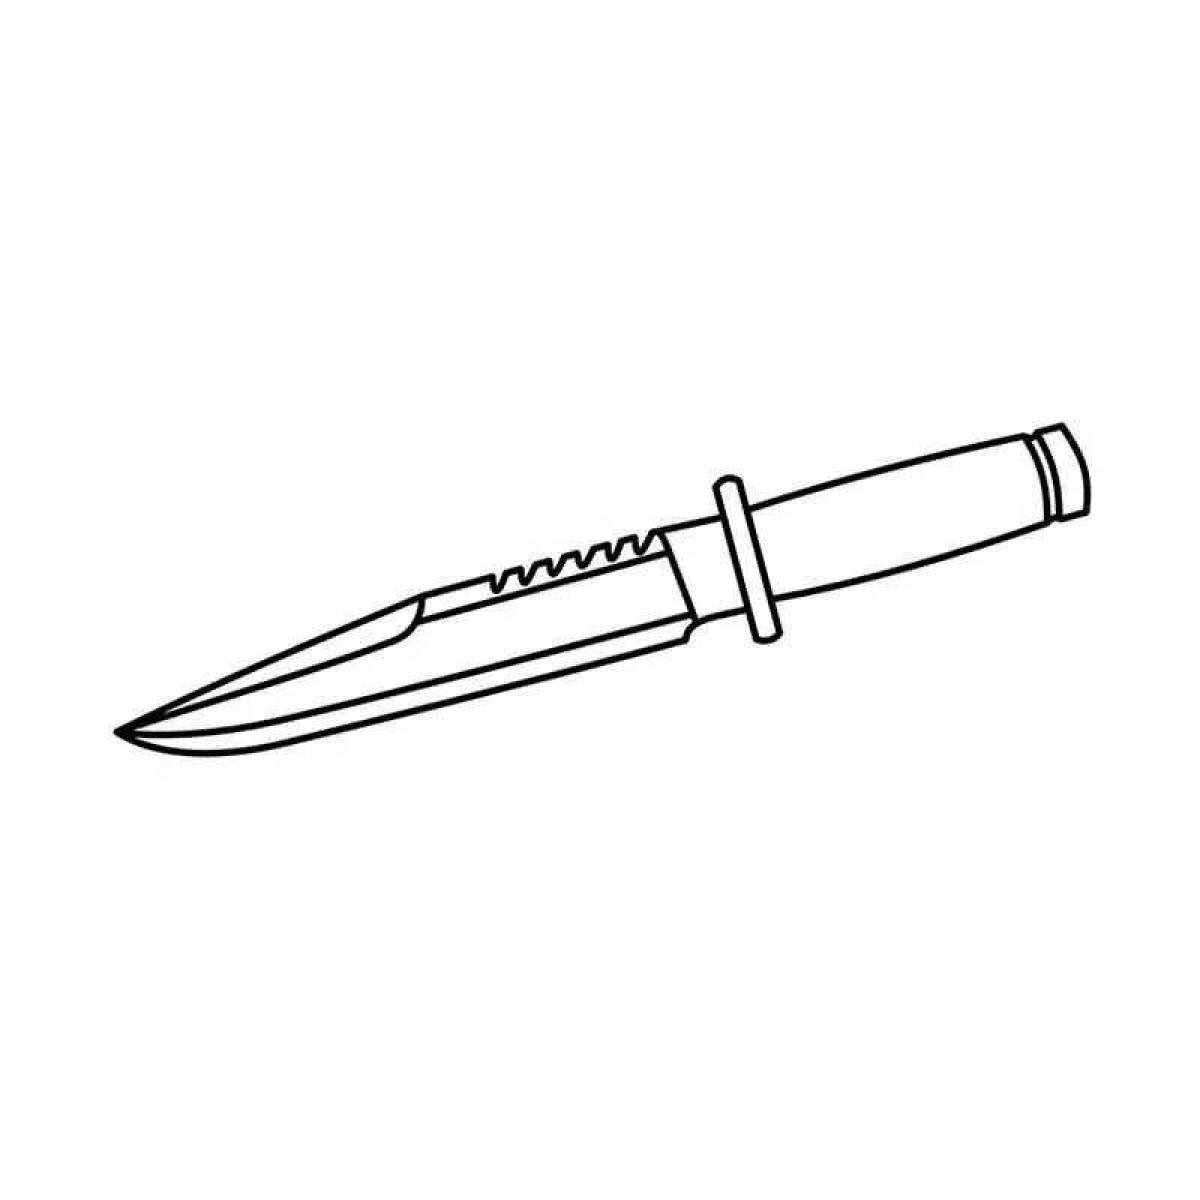 Раскраски стендов ножи. Нож м9 байонет чертеж. Нож м9 байонет раскраски. Раскраски стандофф 2 ножи м9 байонет. Штык нож м9 раскраска.